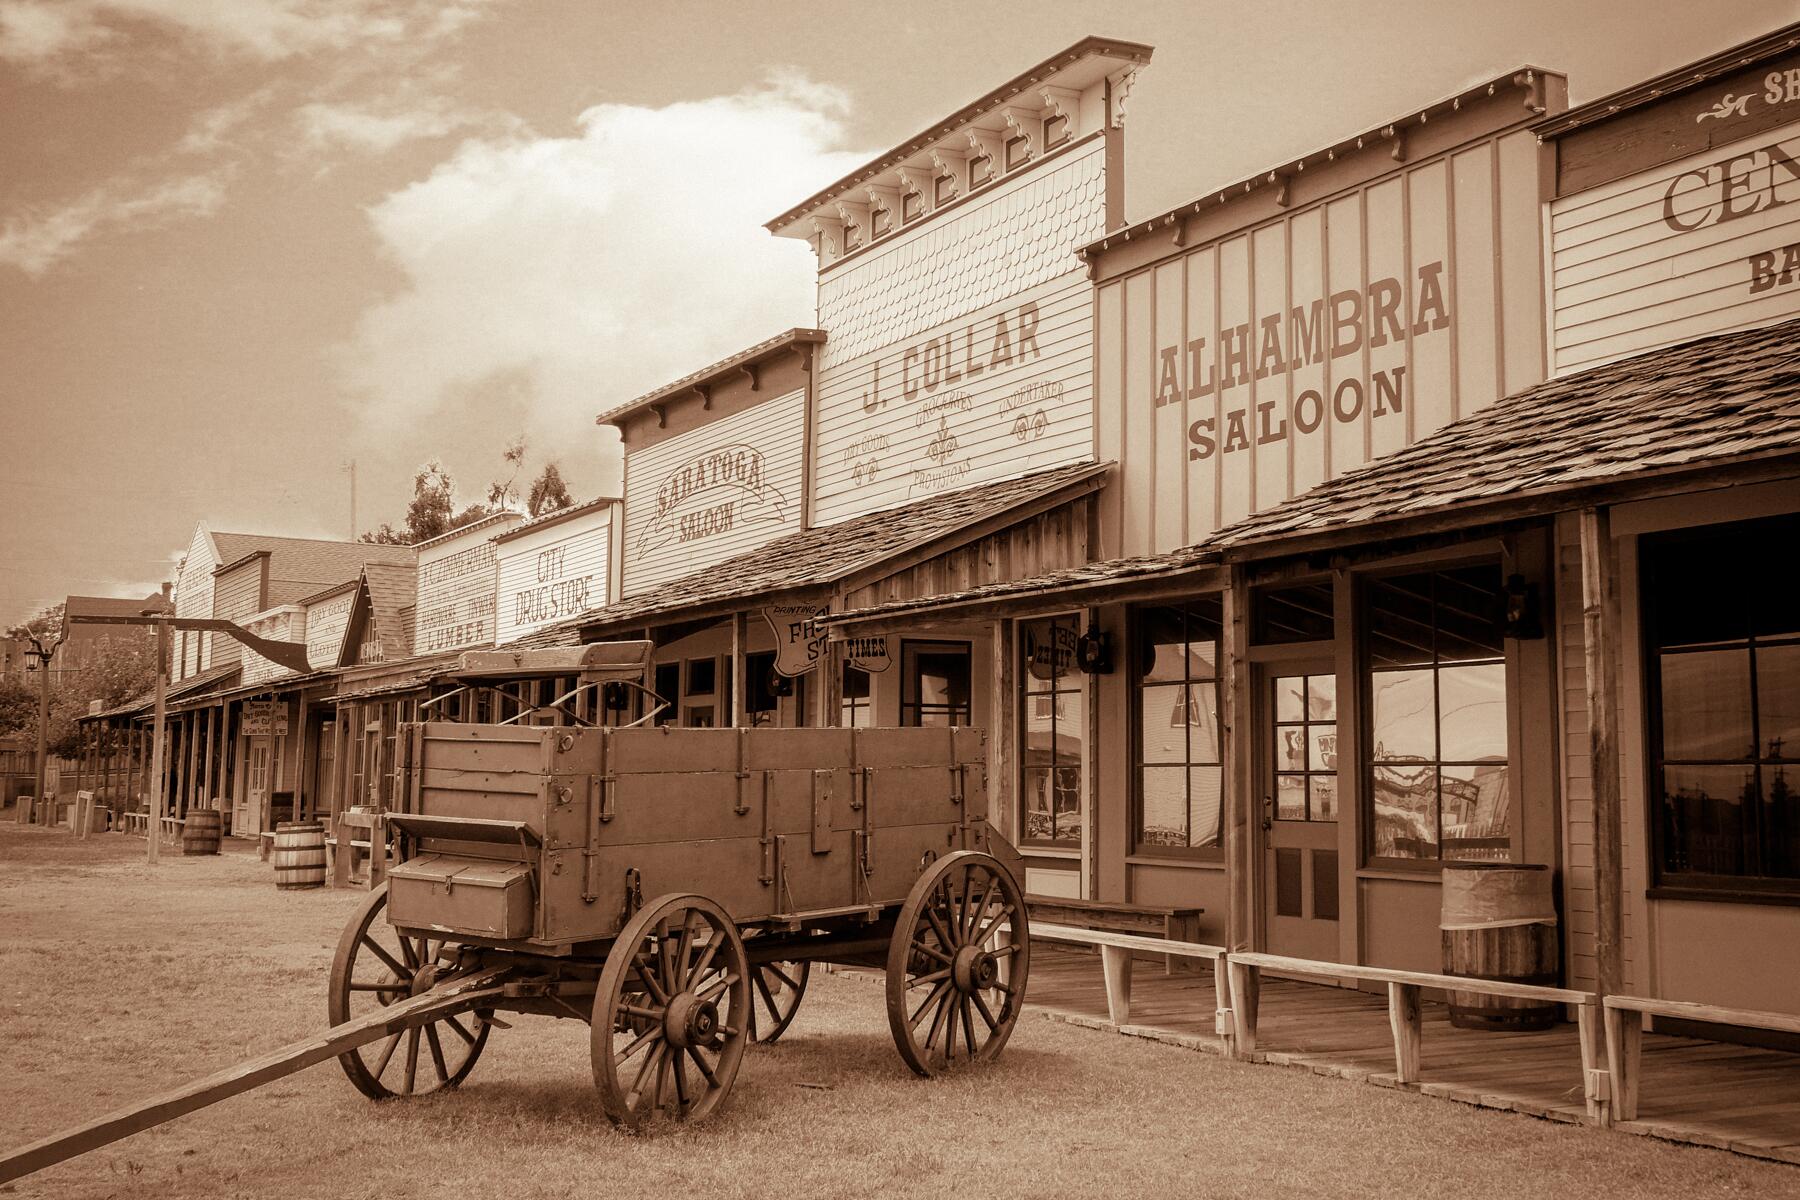 A wagon sits outside a saloon